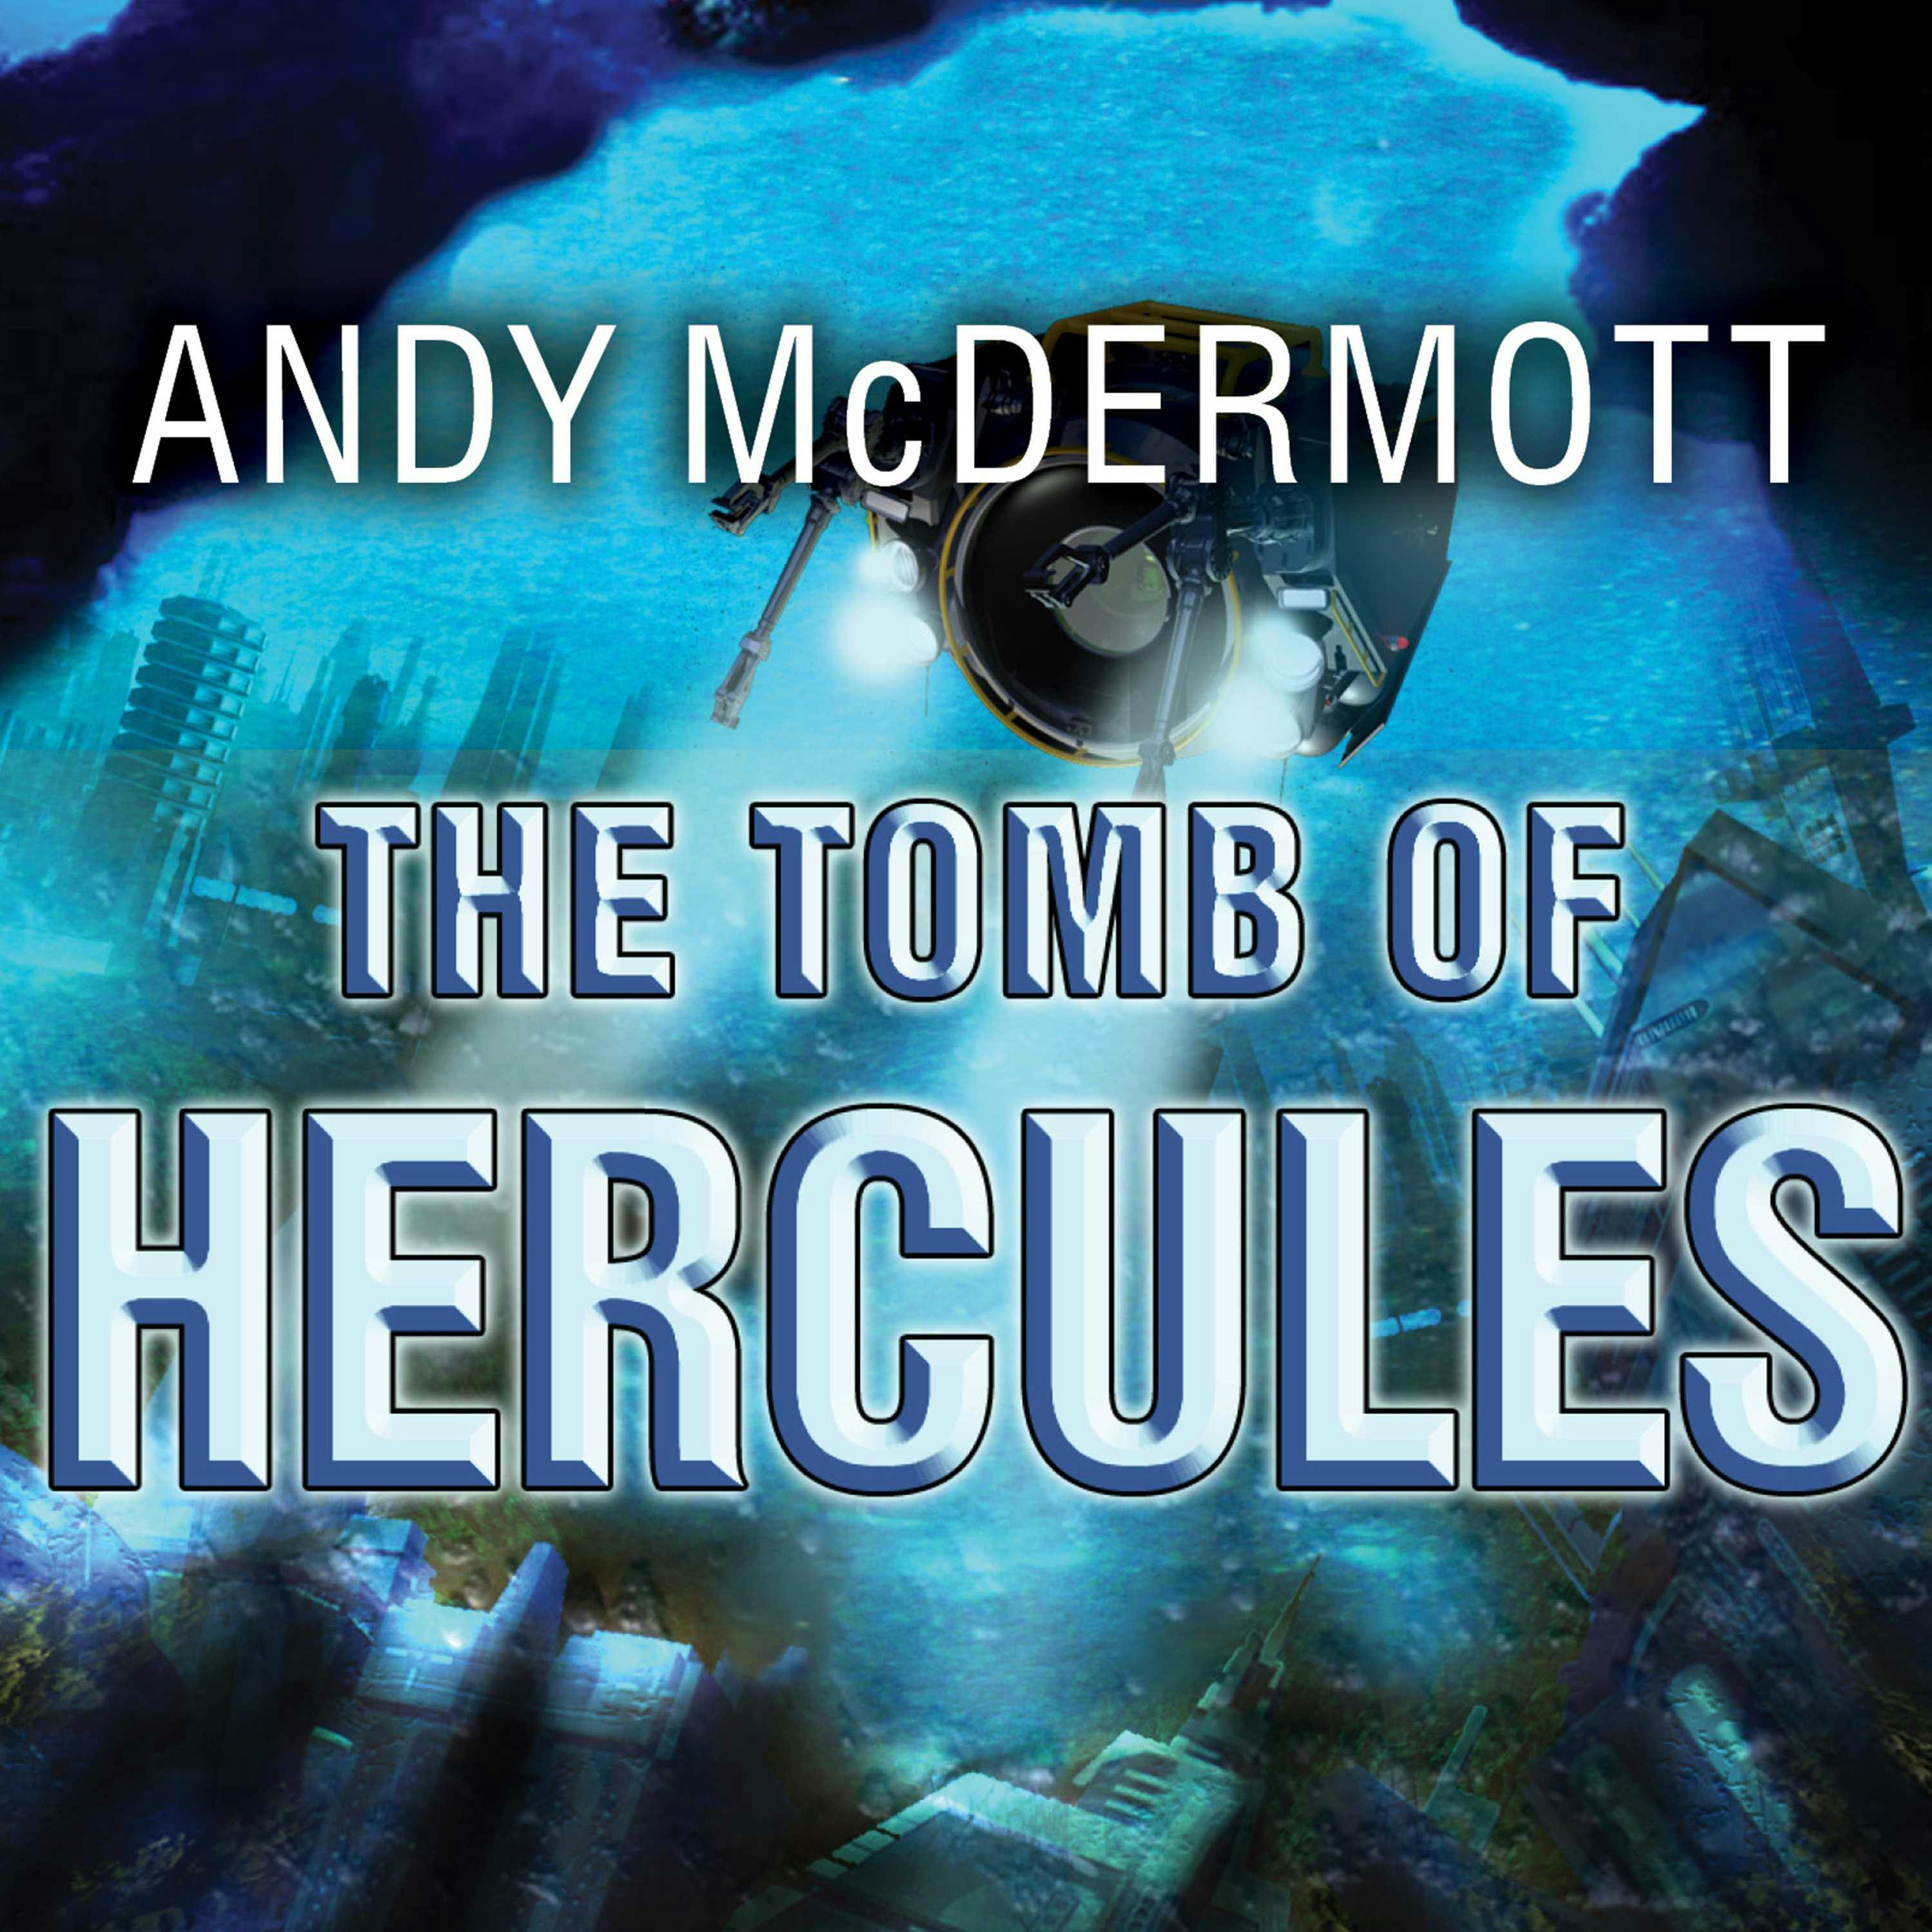 The Tomb of Hercules: A Novel - Andy McDermott